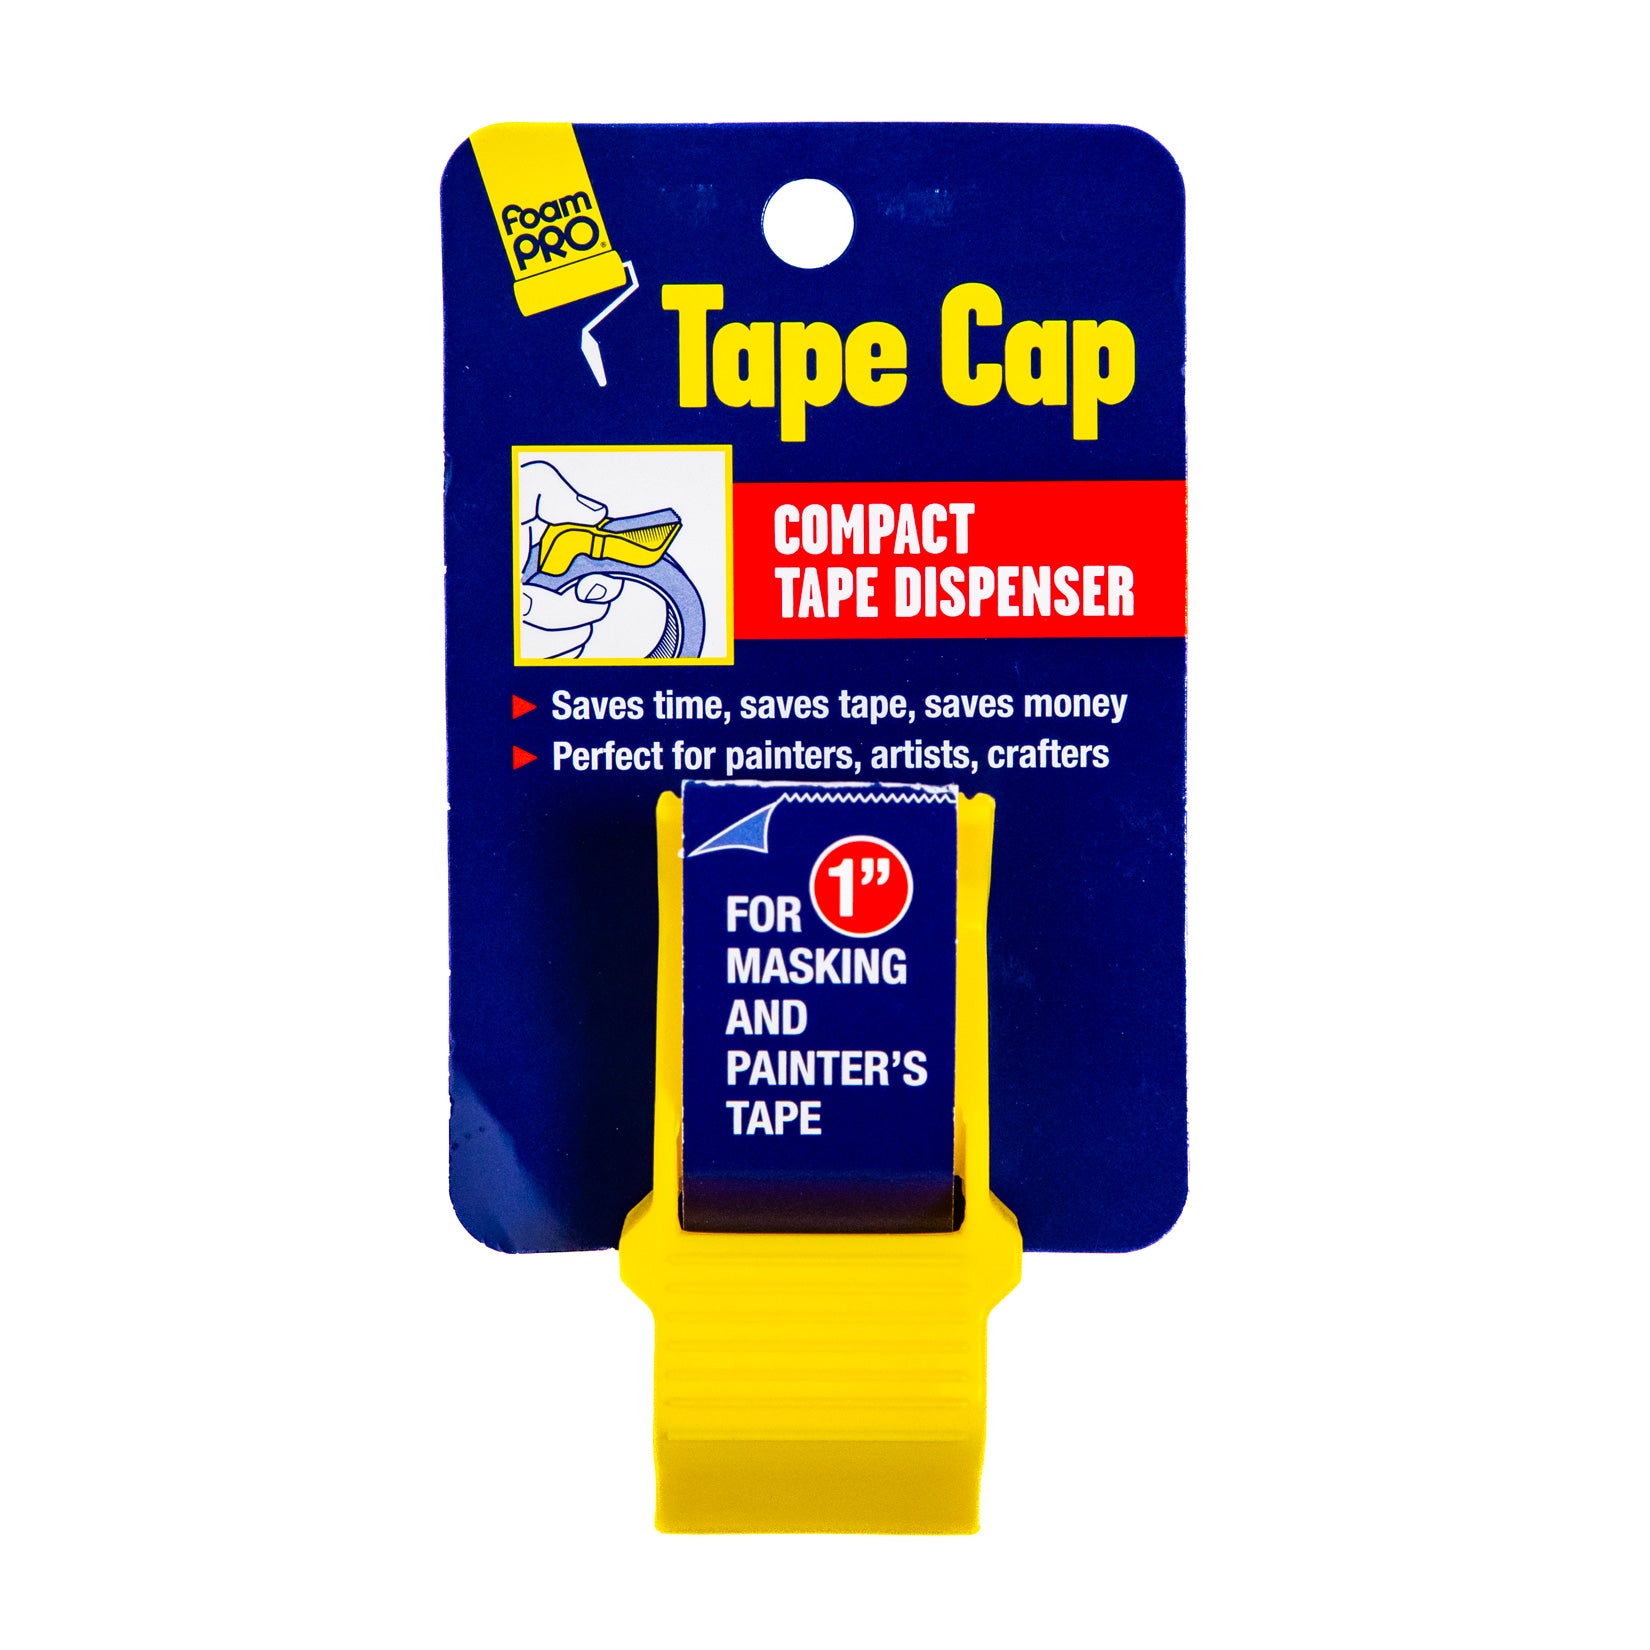 FoamPRO Tape Cap Compact Tape Dispenser